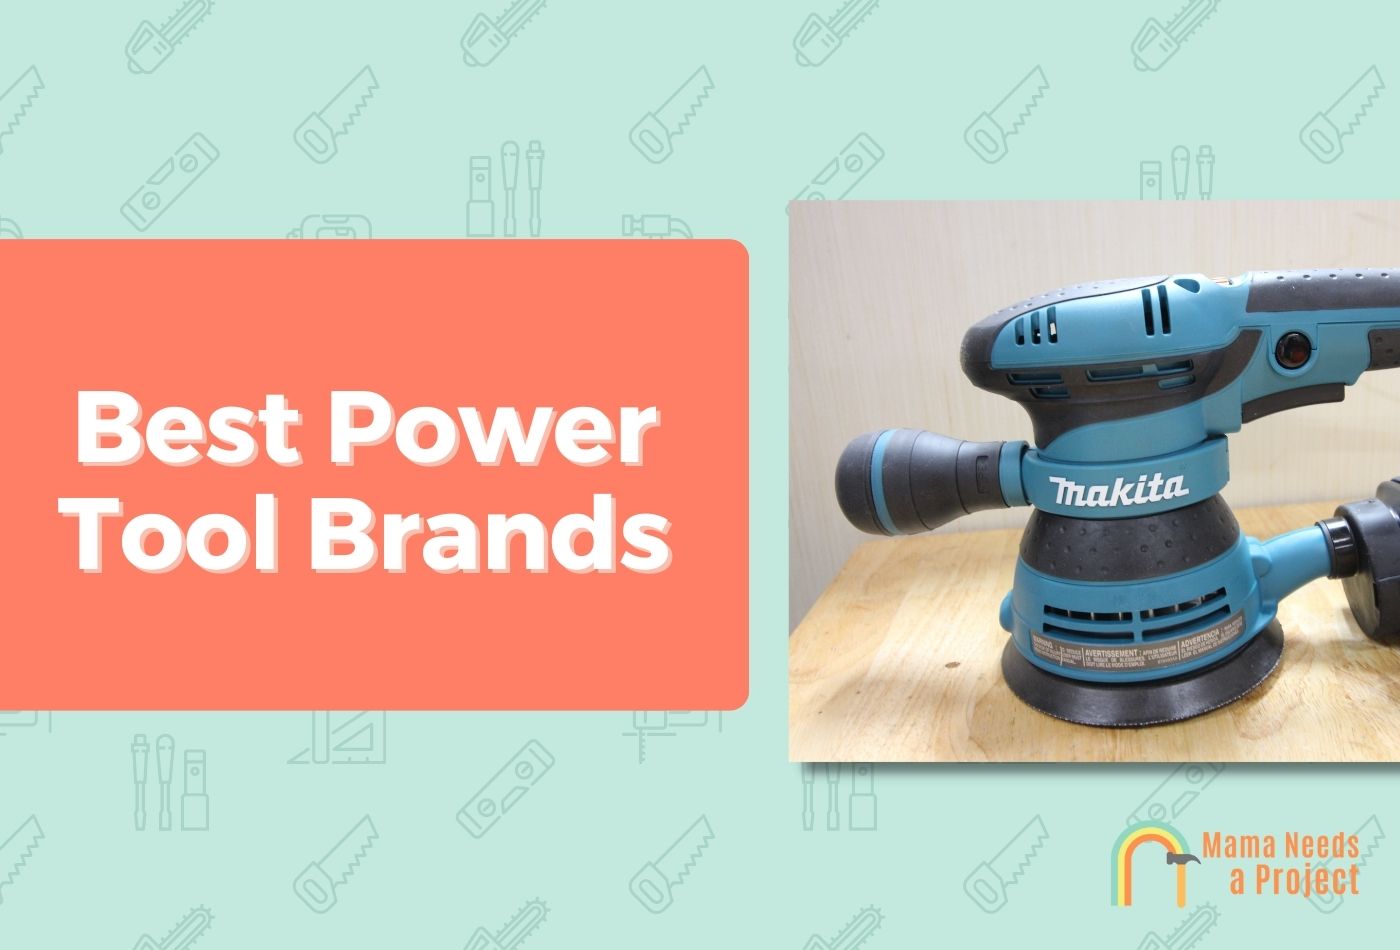 Best Power Tool Brand